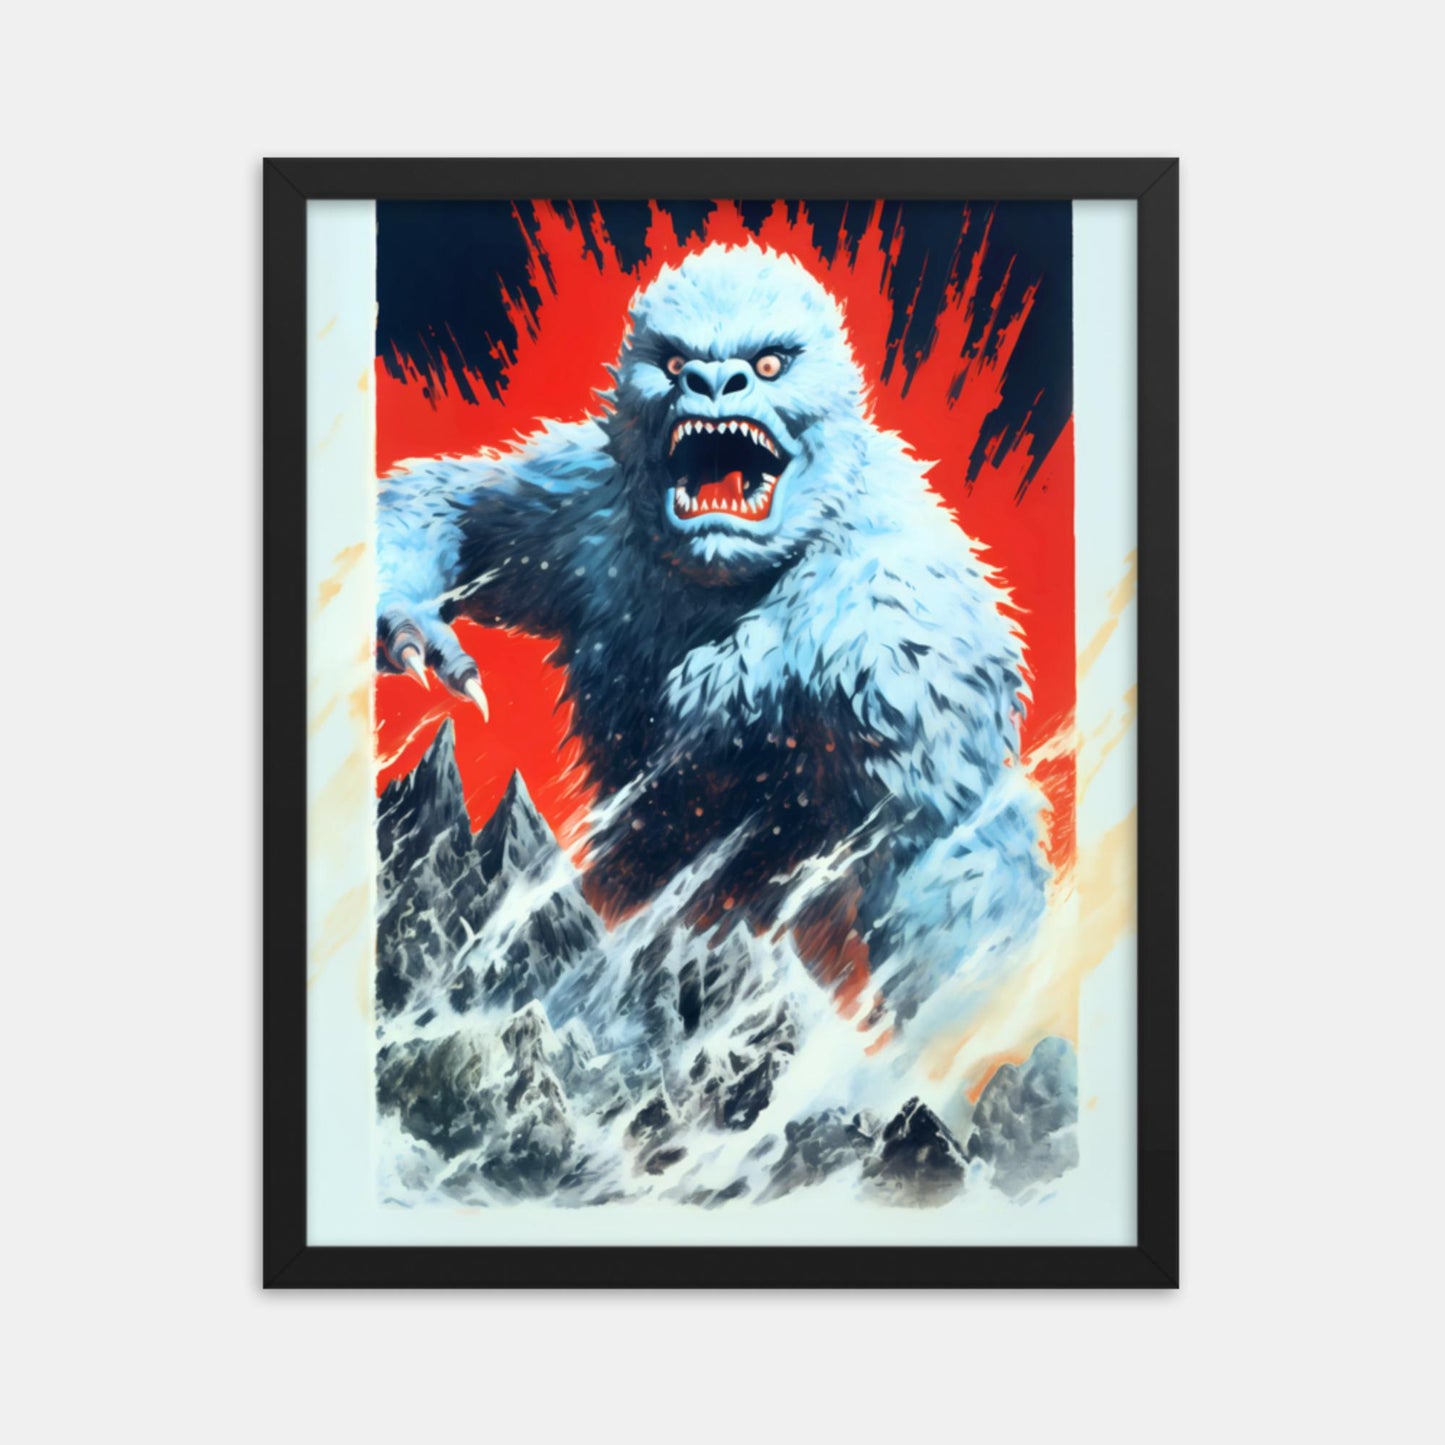 Yeti the Snow Creature Framed Print